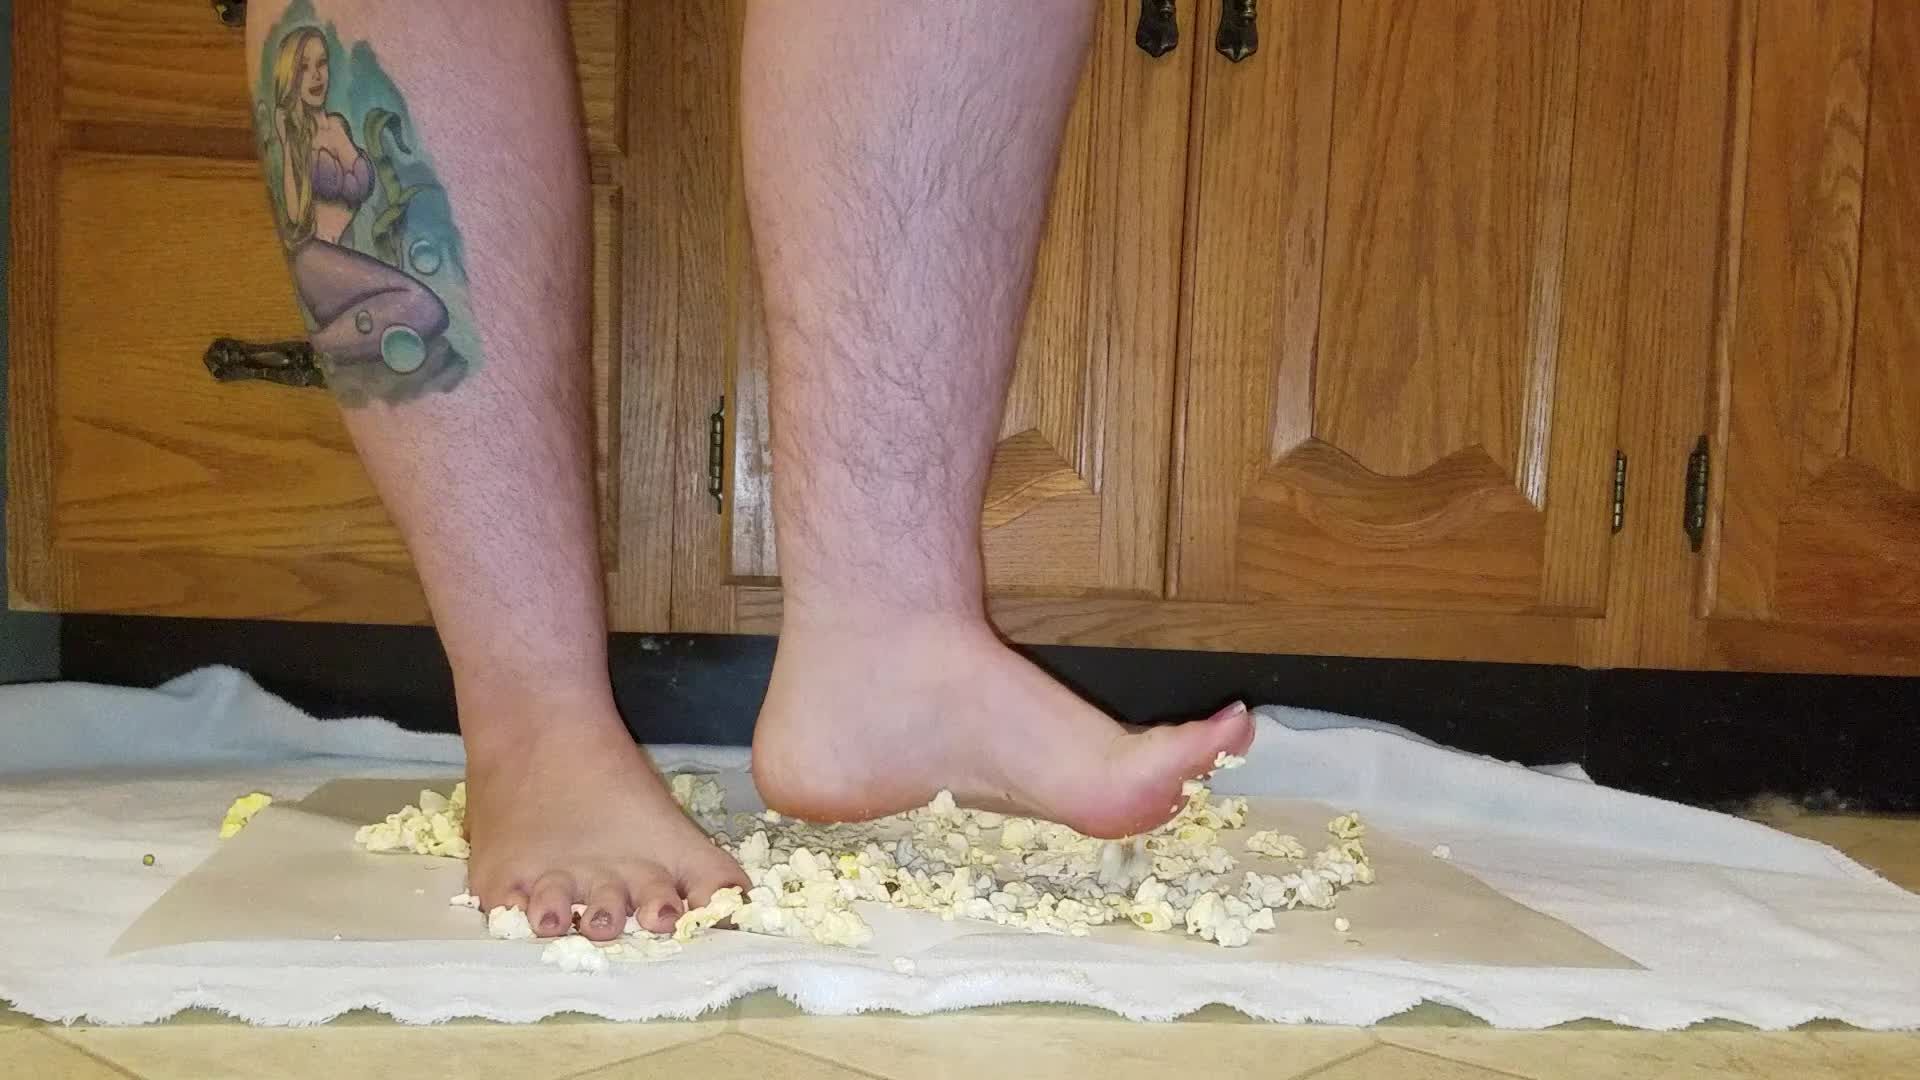 Crushing popcorn with my big feet